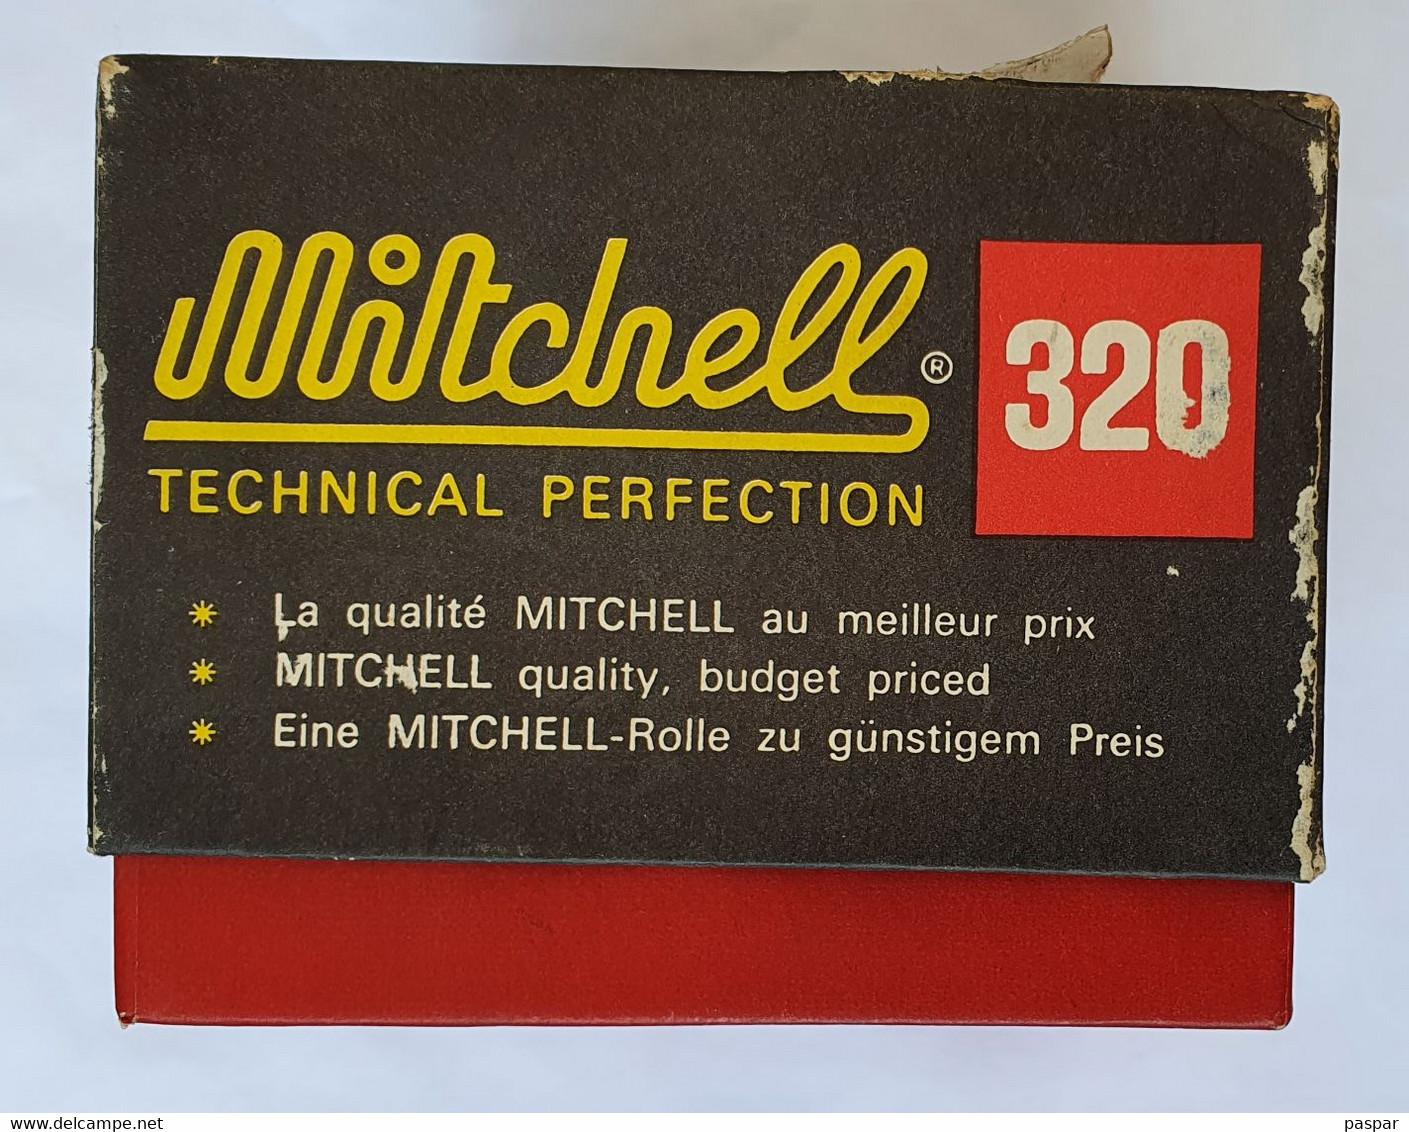 Ancien moulinet Mitchell 320 Avec sa boite et sa notice 1973